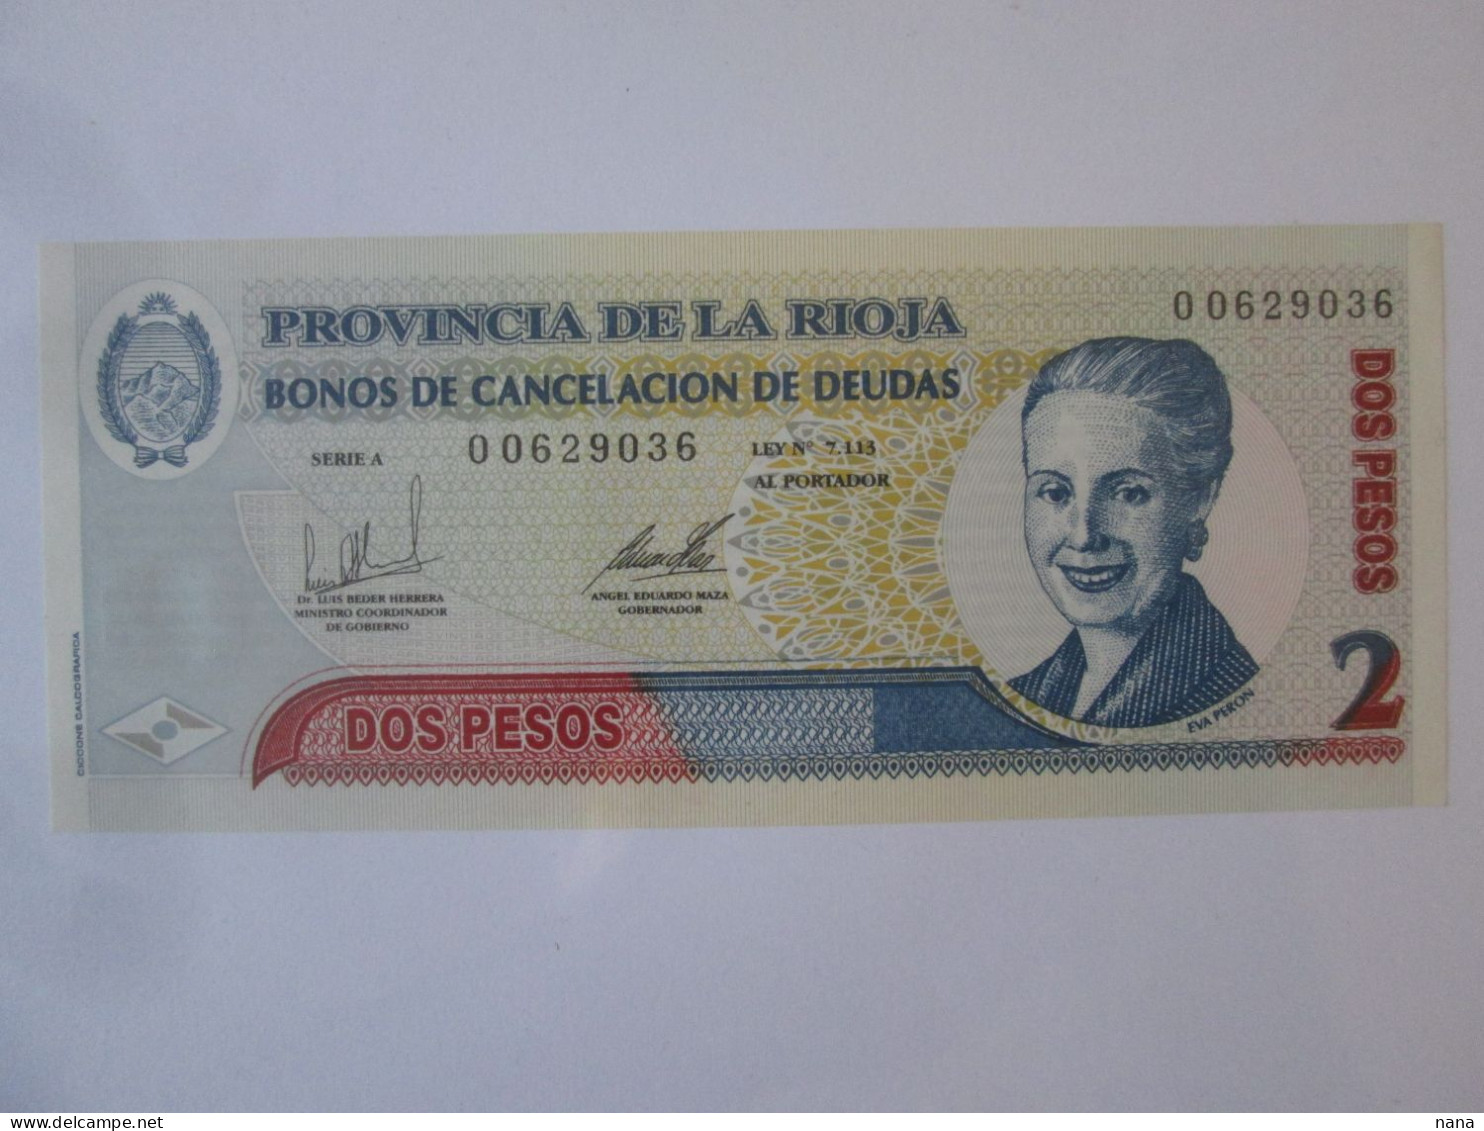 Rare! Argentina 2 Pesos 2003 Province La Rioja Banknote UNC,see Pictures - Argentinien